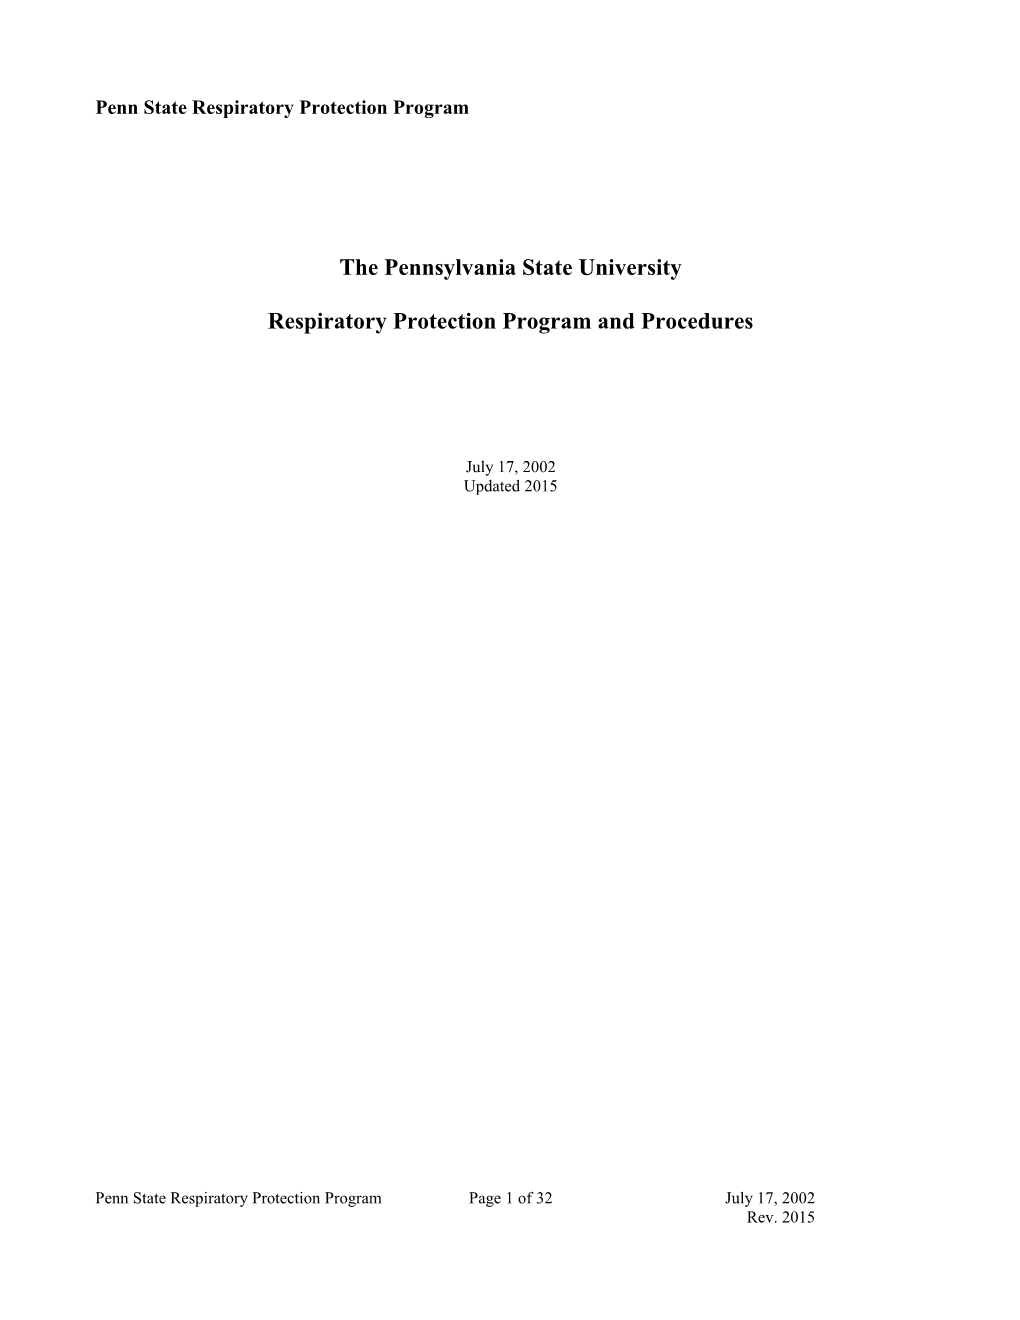 OPP Respiratory Protection Program Manual Text